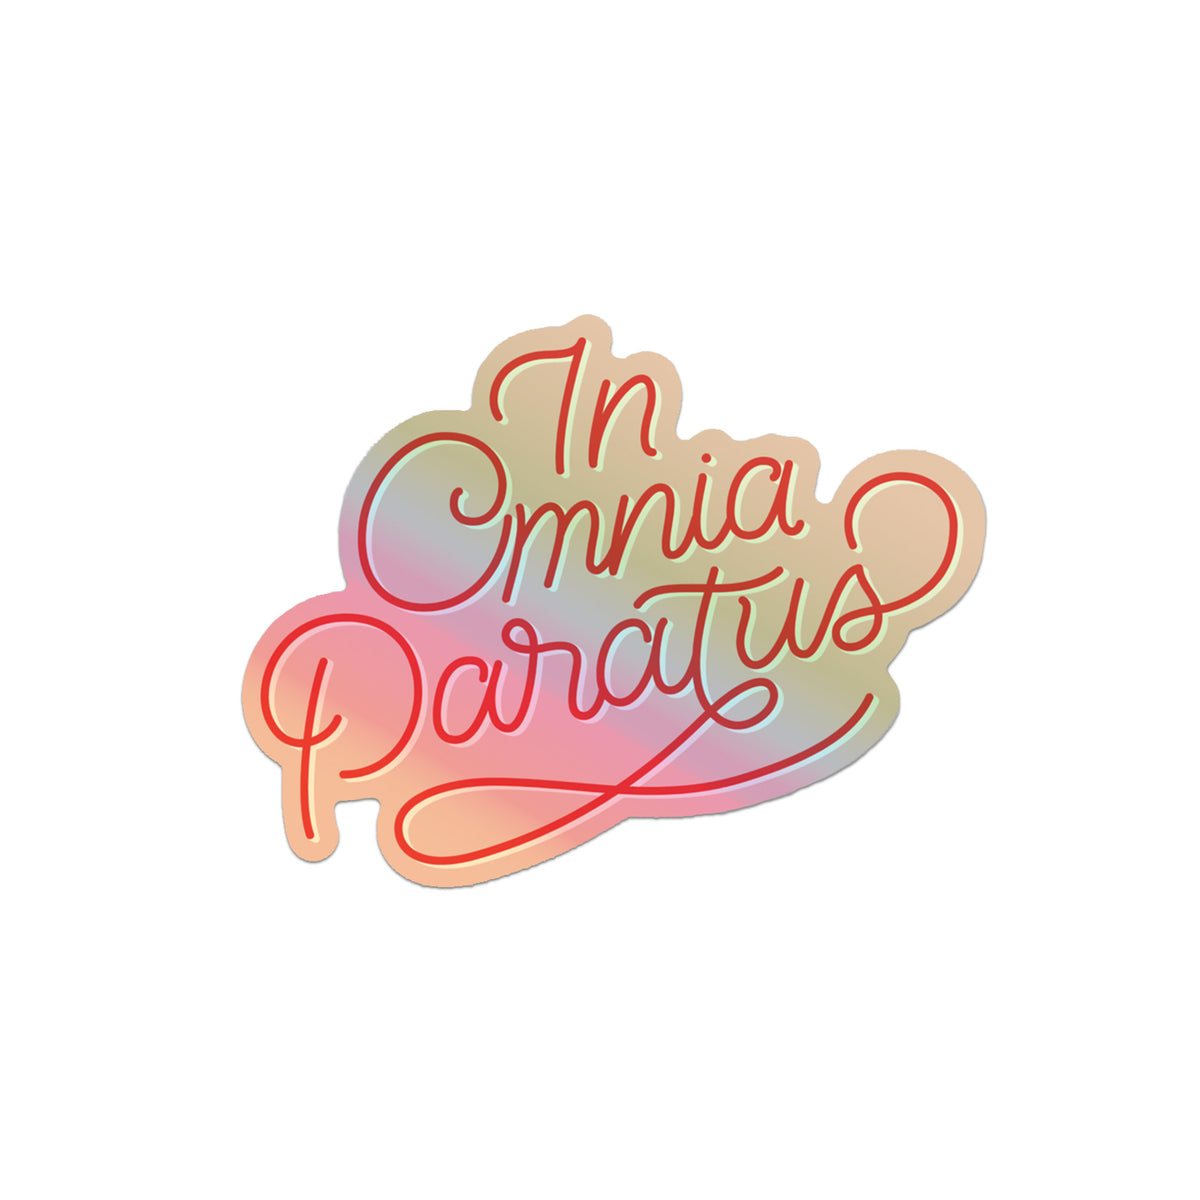 In Omnia Paratus Sticker